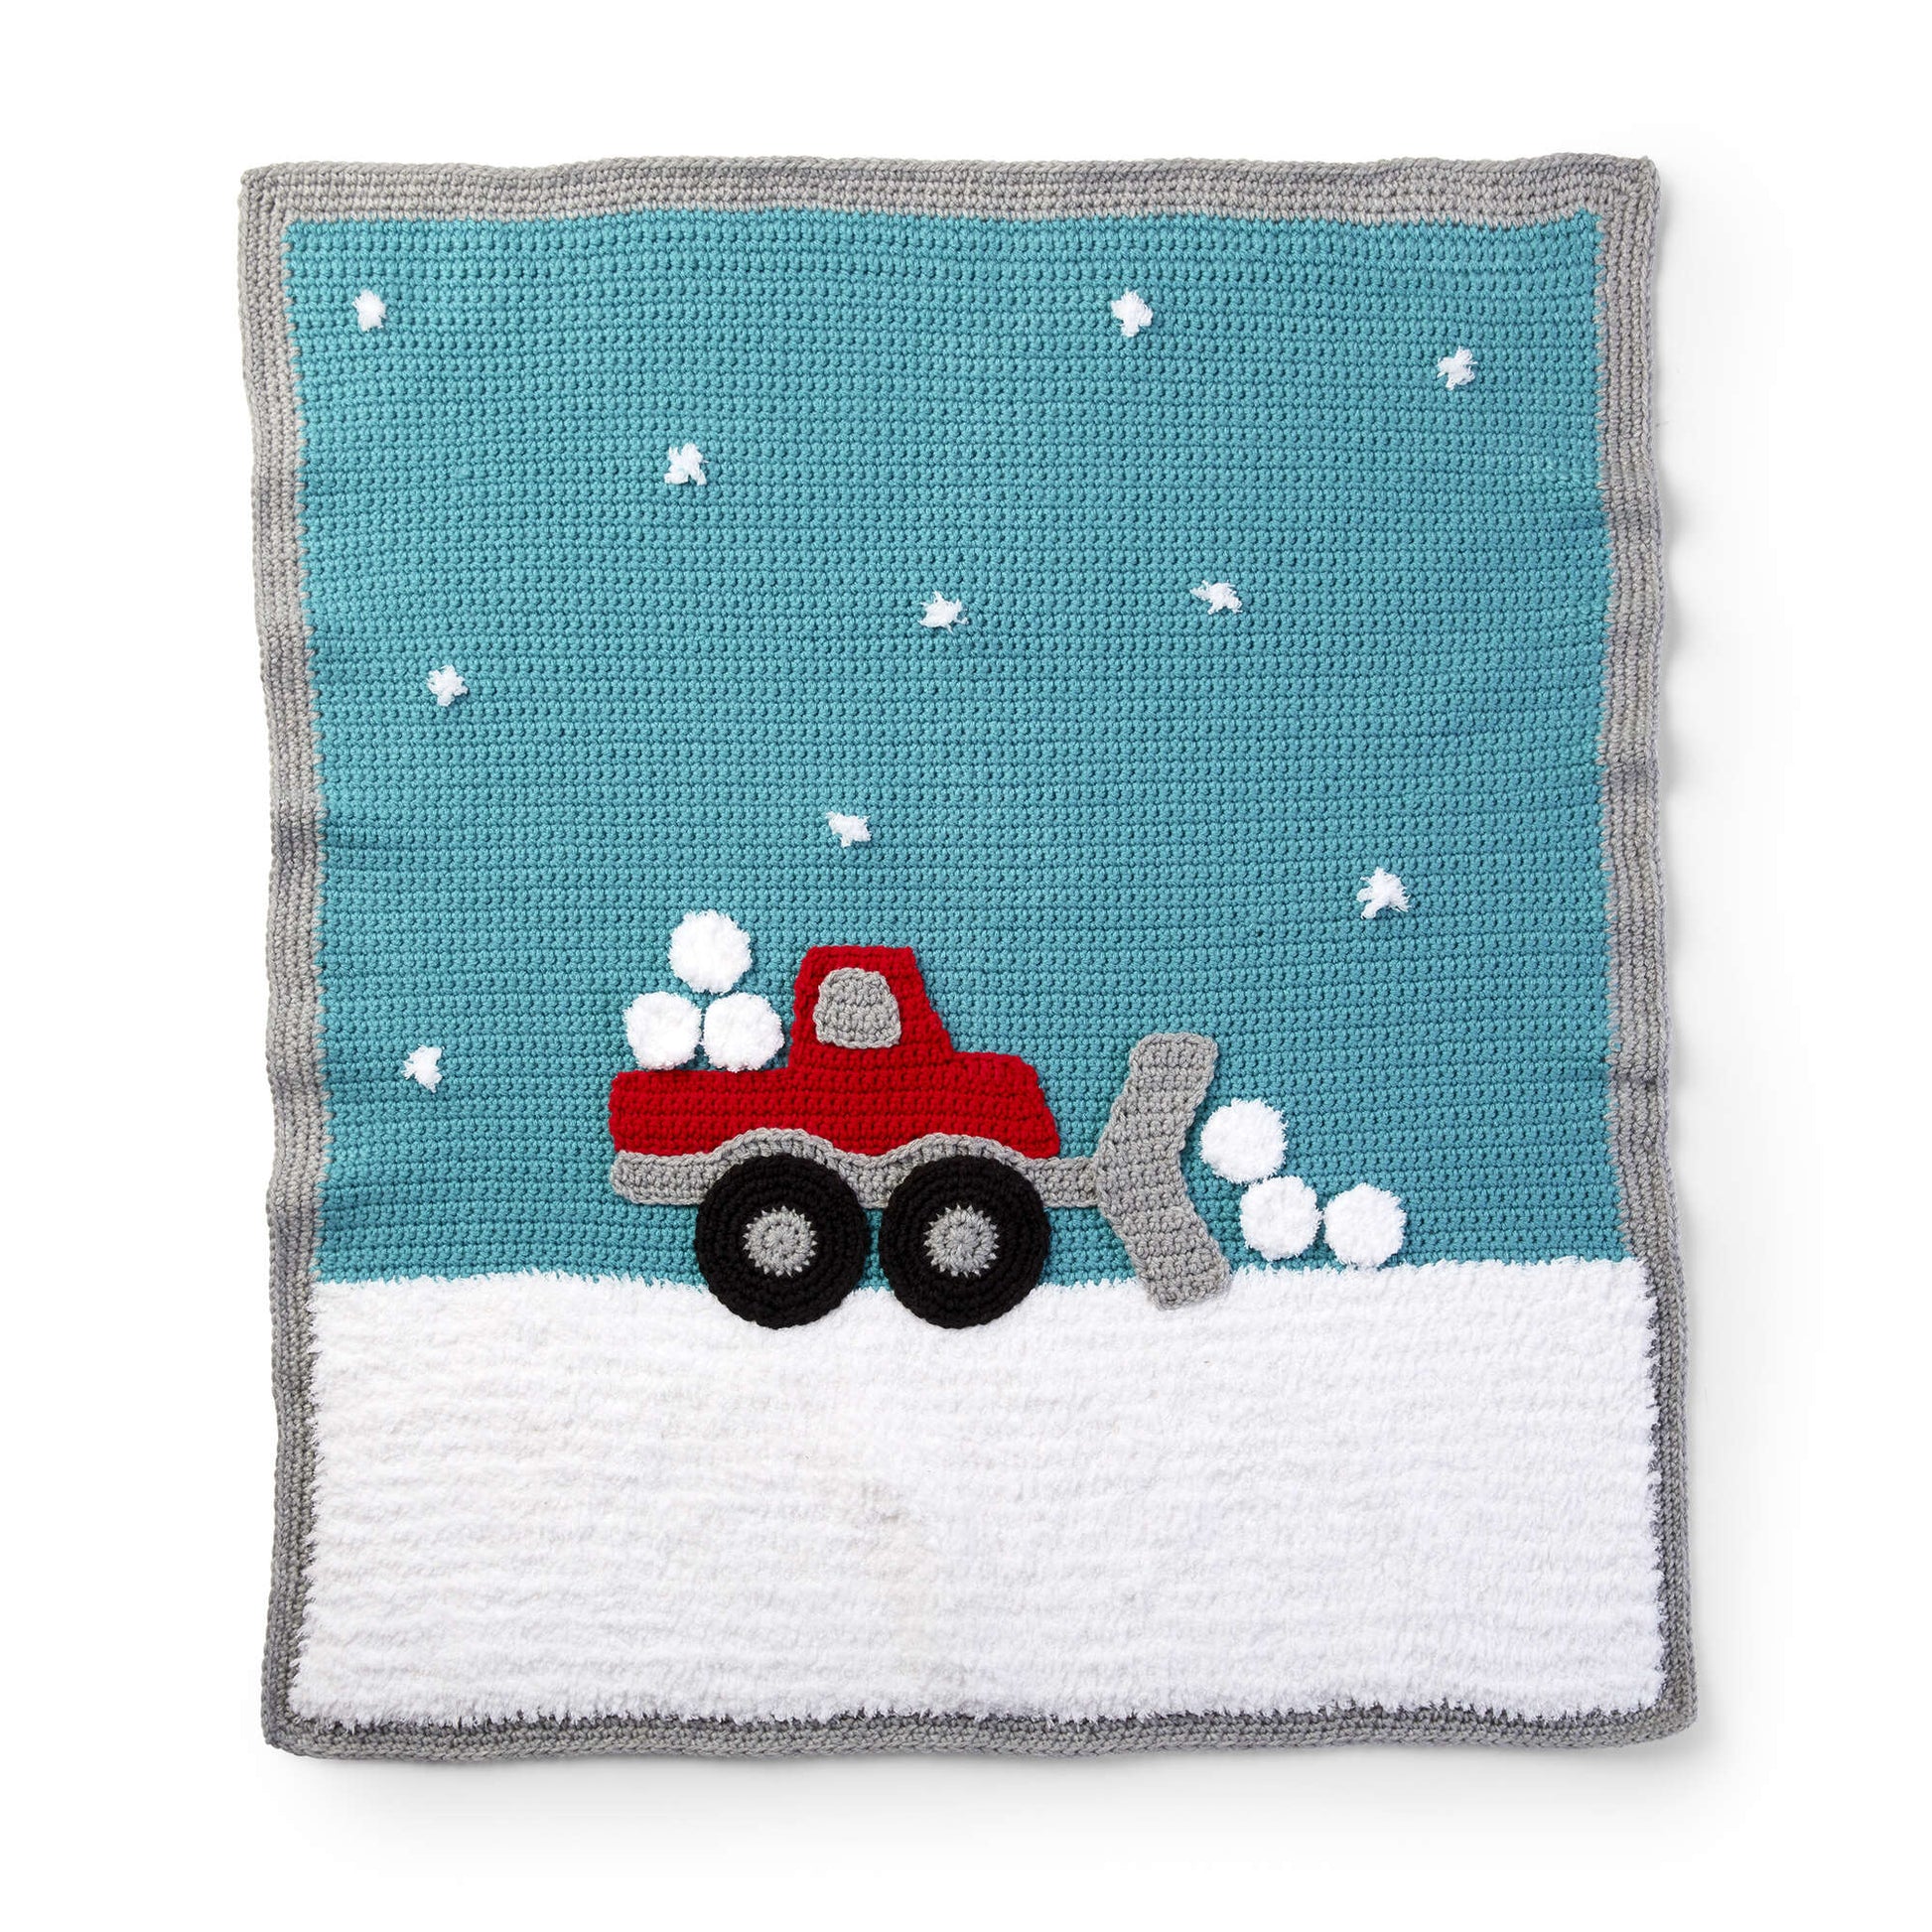 Bernat Crochet Snowplow Blanket Crochet Blanket made in Bernat Super Value yarn